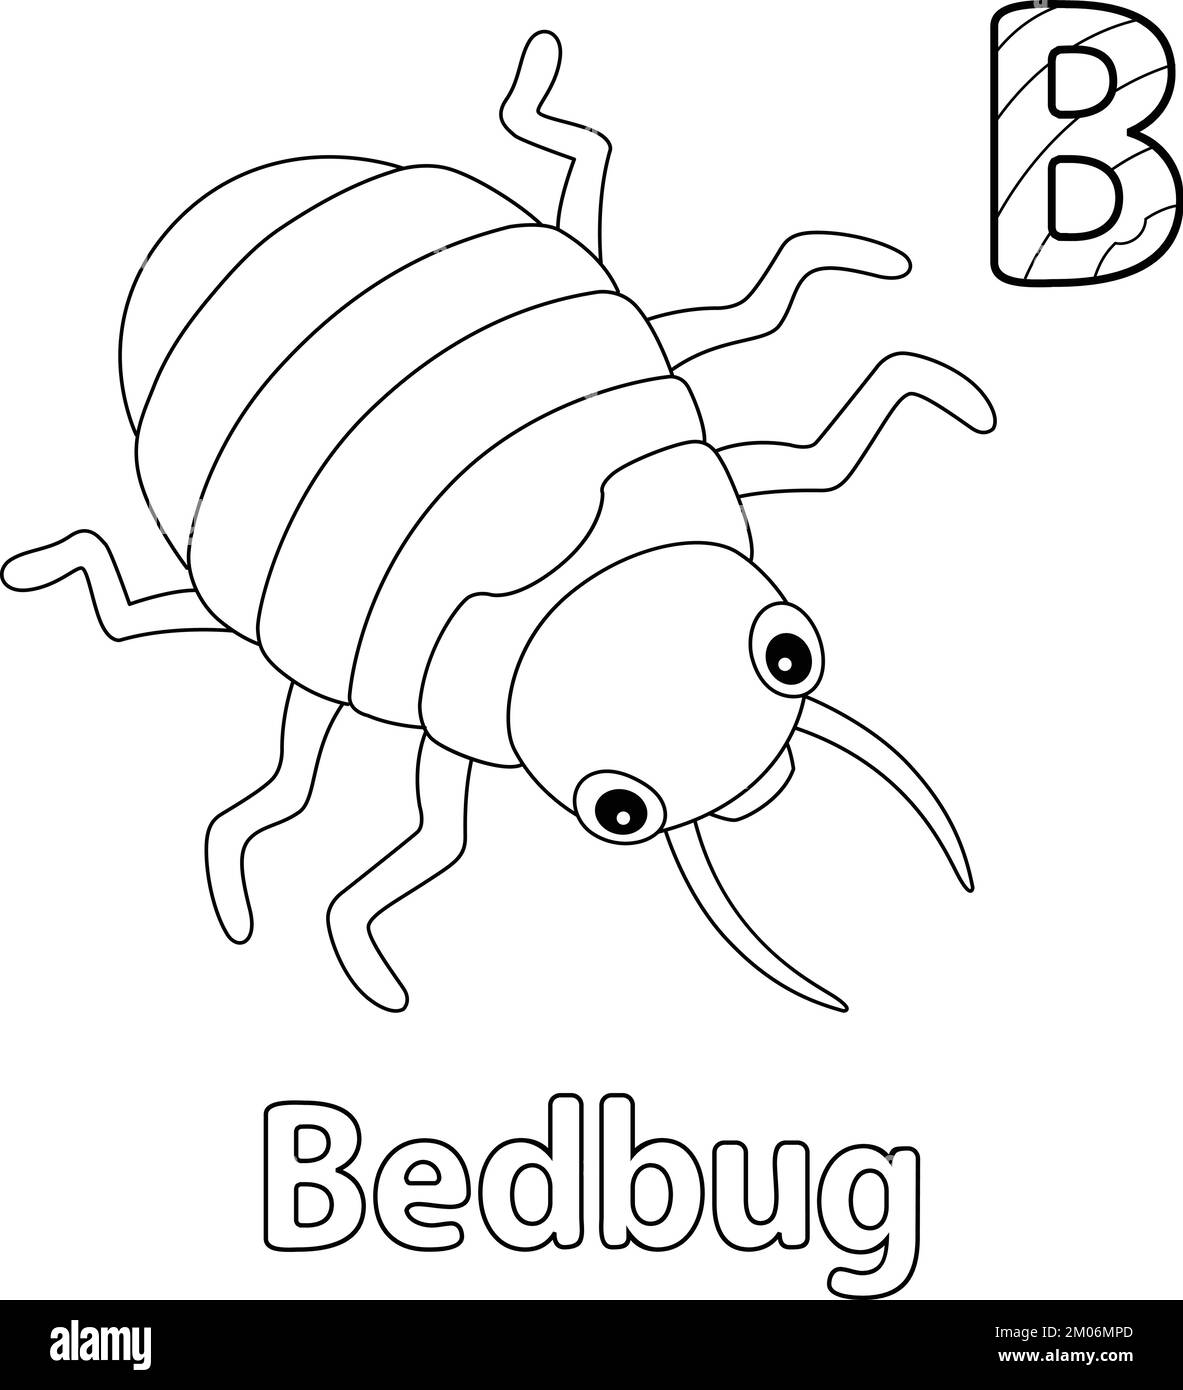 Bedbug Animal Alphabet ABC Isolated Coloring B Stock Vector Image & Art ...